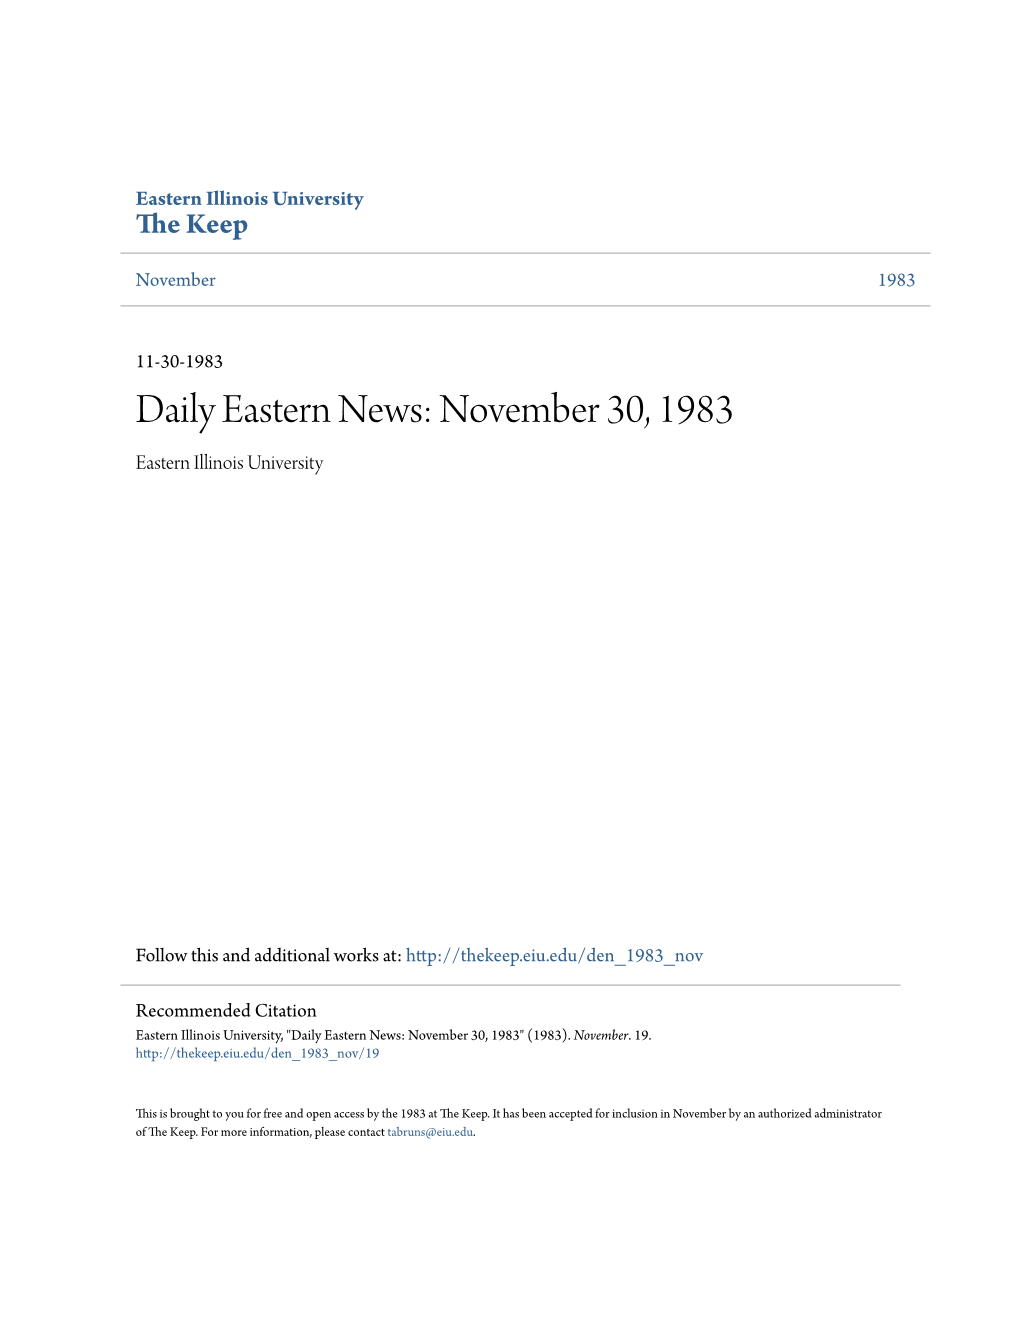 Daily Eastern News: November 30, 1983 Eastern Illinois University